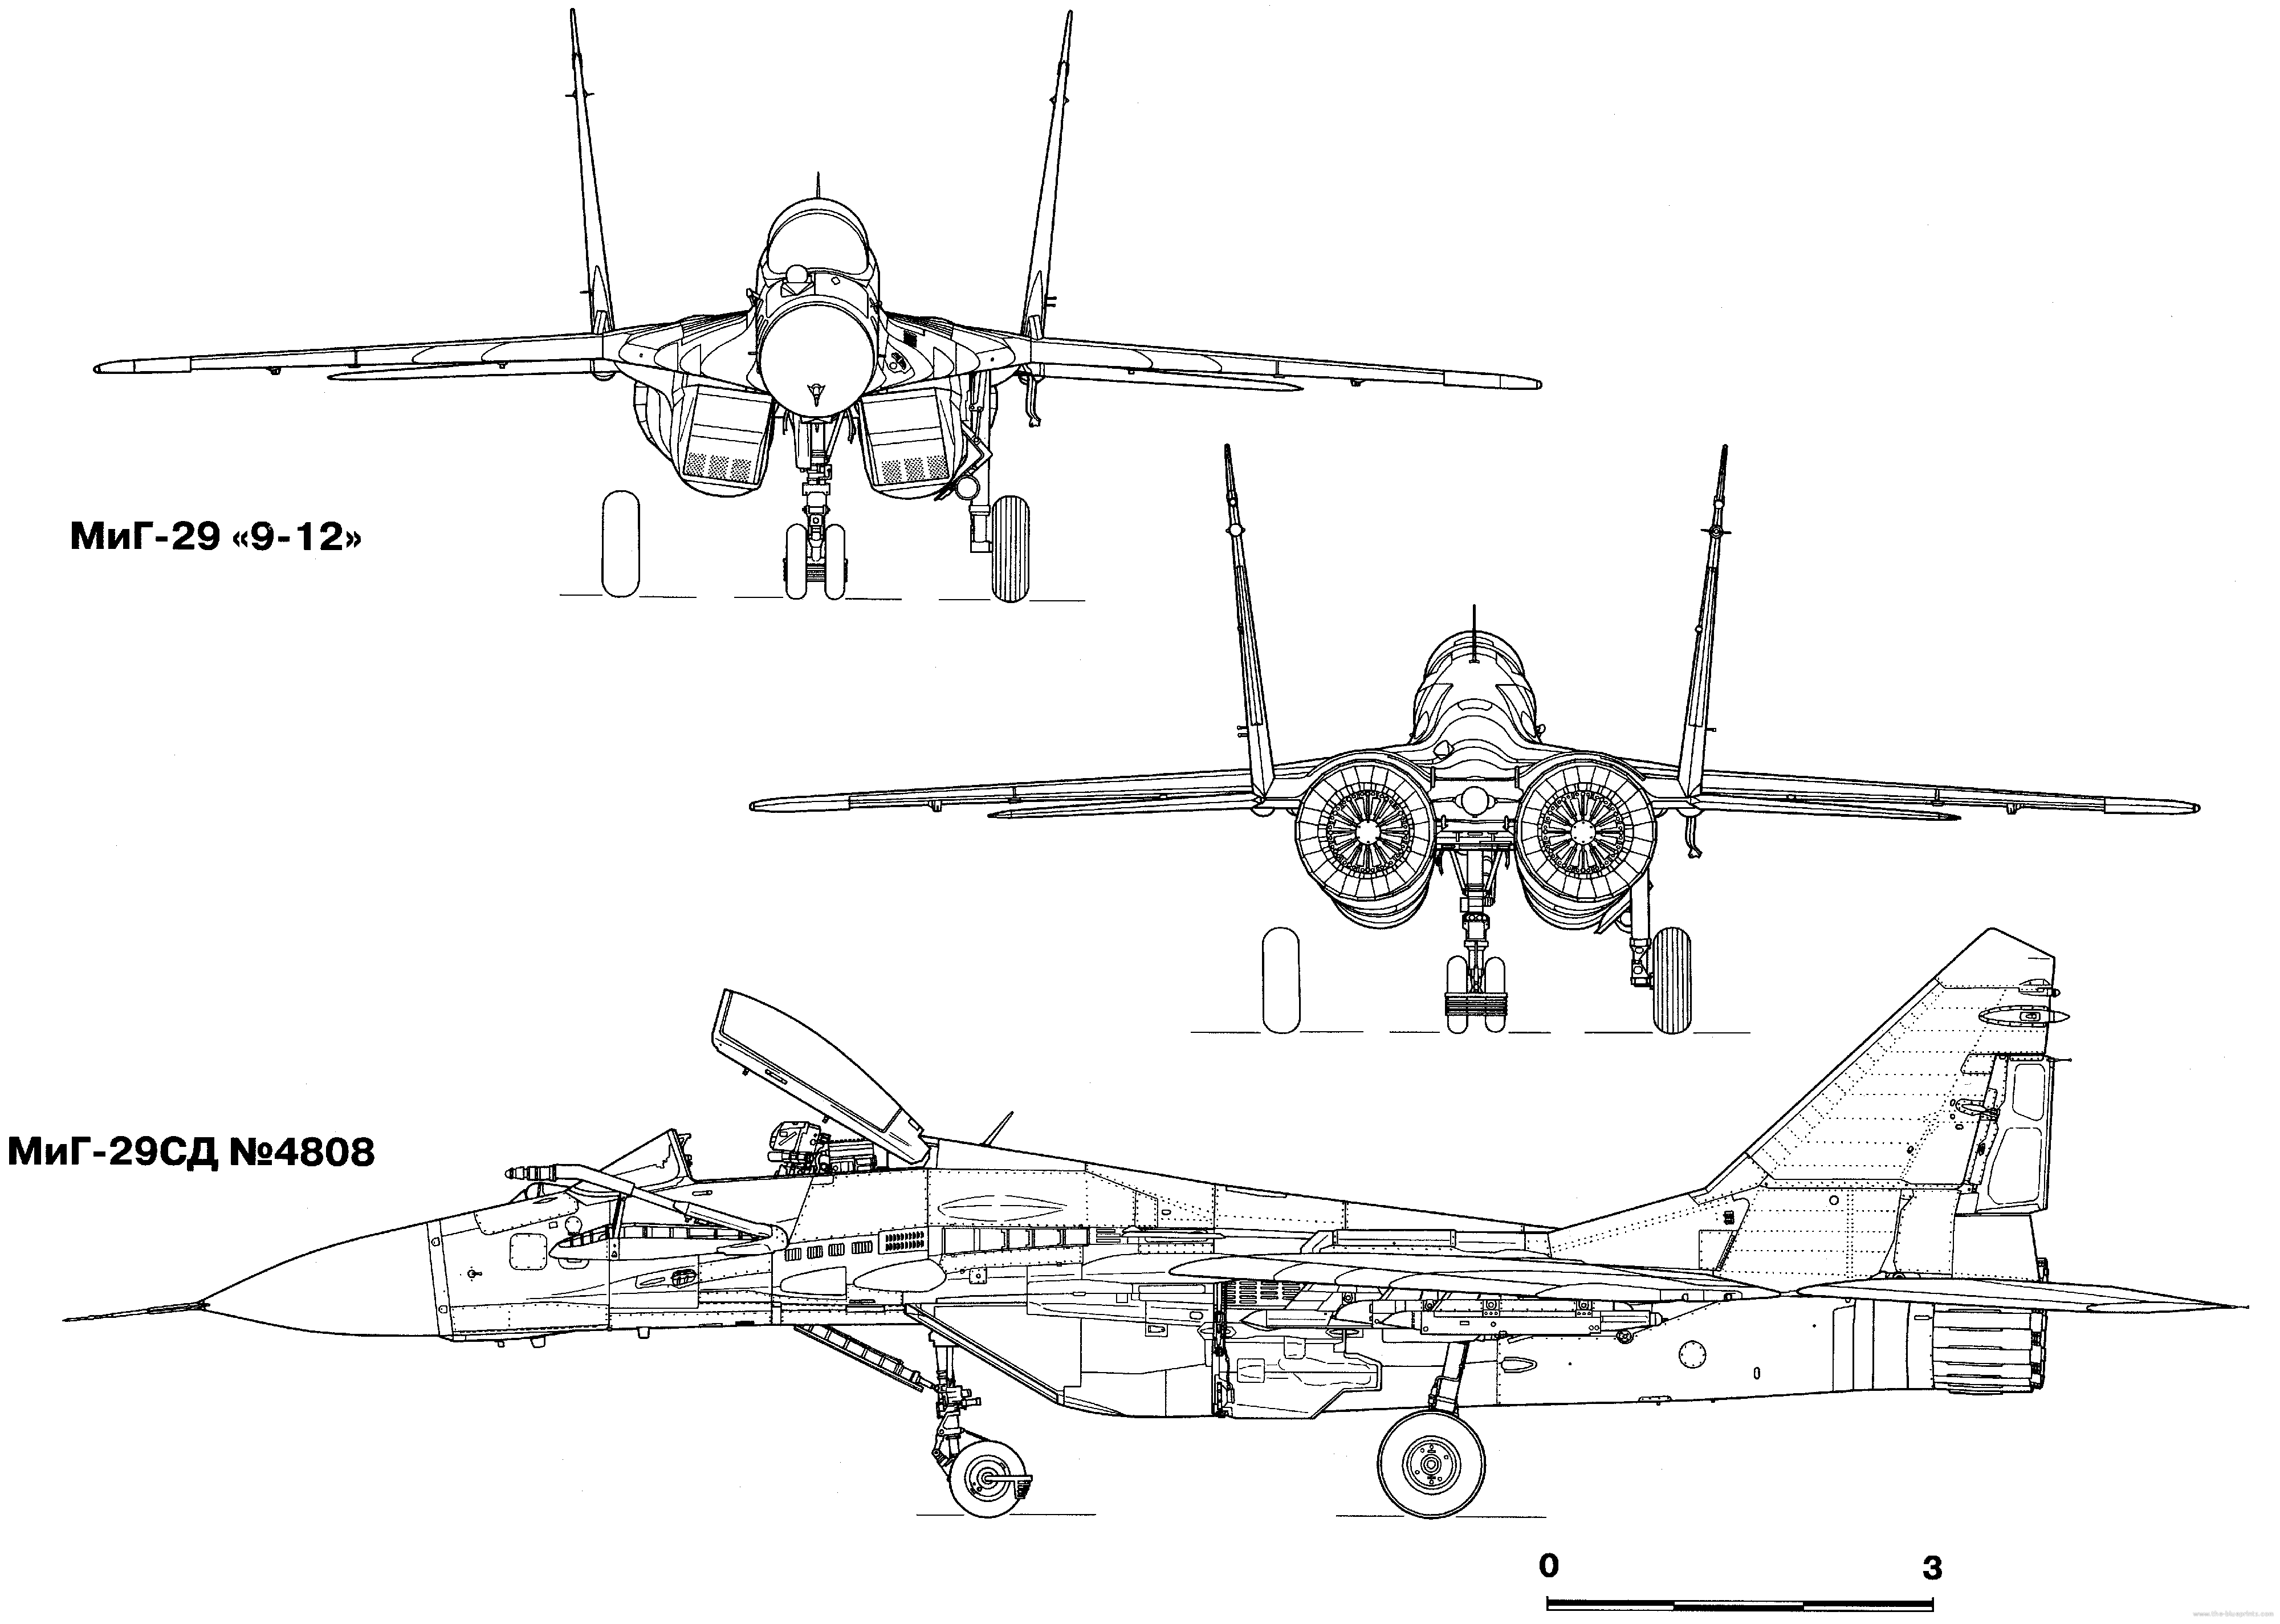 http://www.the-blueprints.com/blueprints-depot/modernplanes/mikoyan-gurevich-mig/mikoyan-gurevich-mig-29-11.png